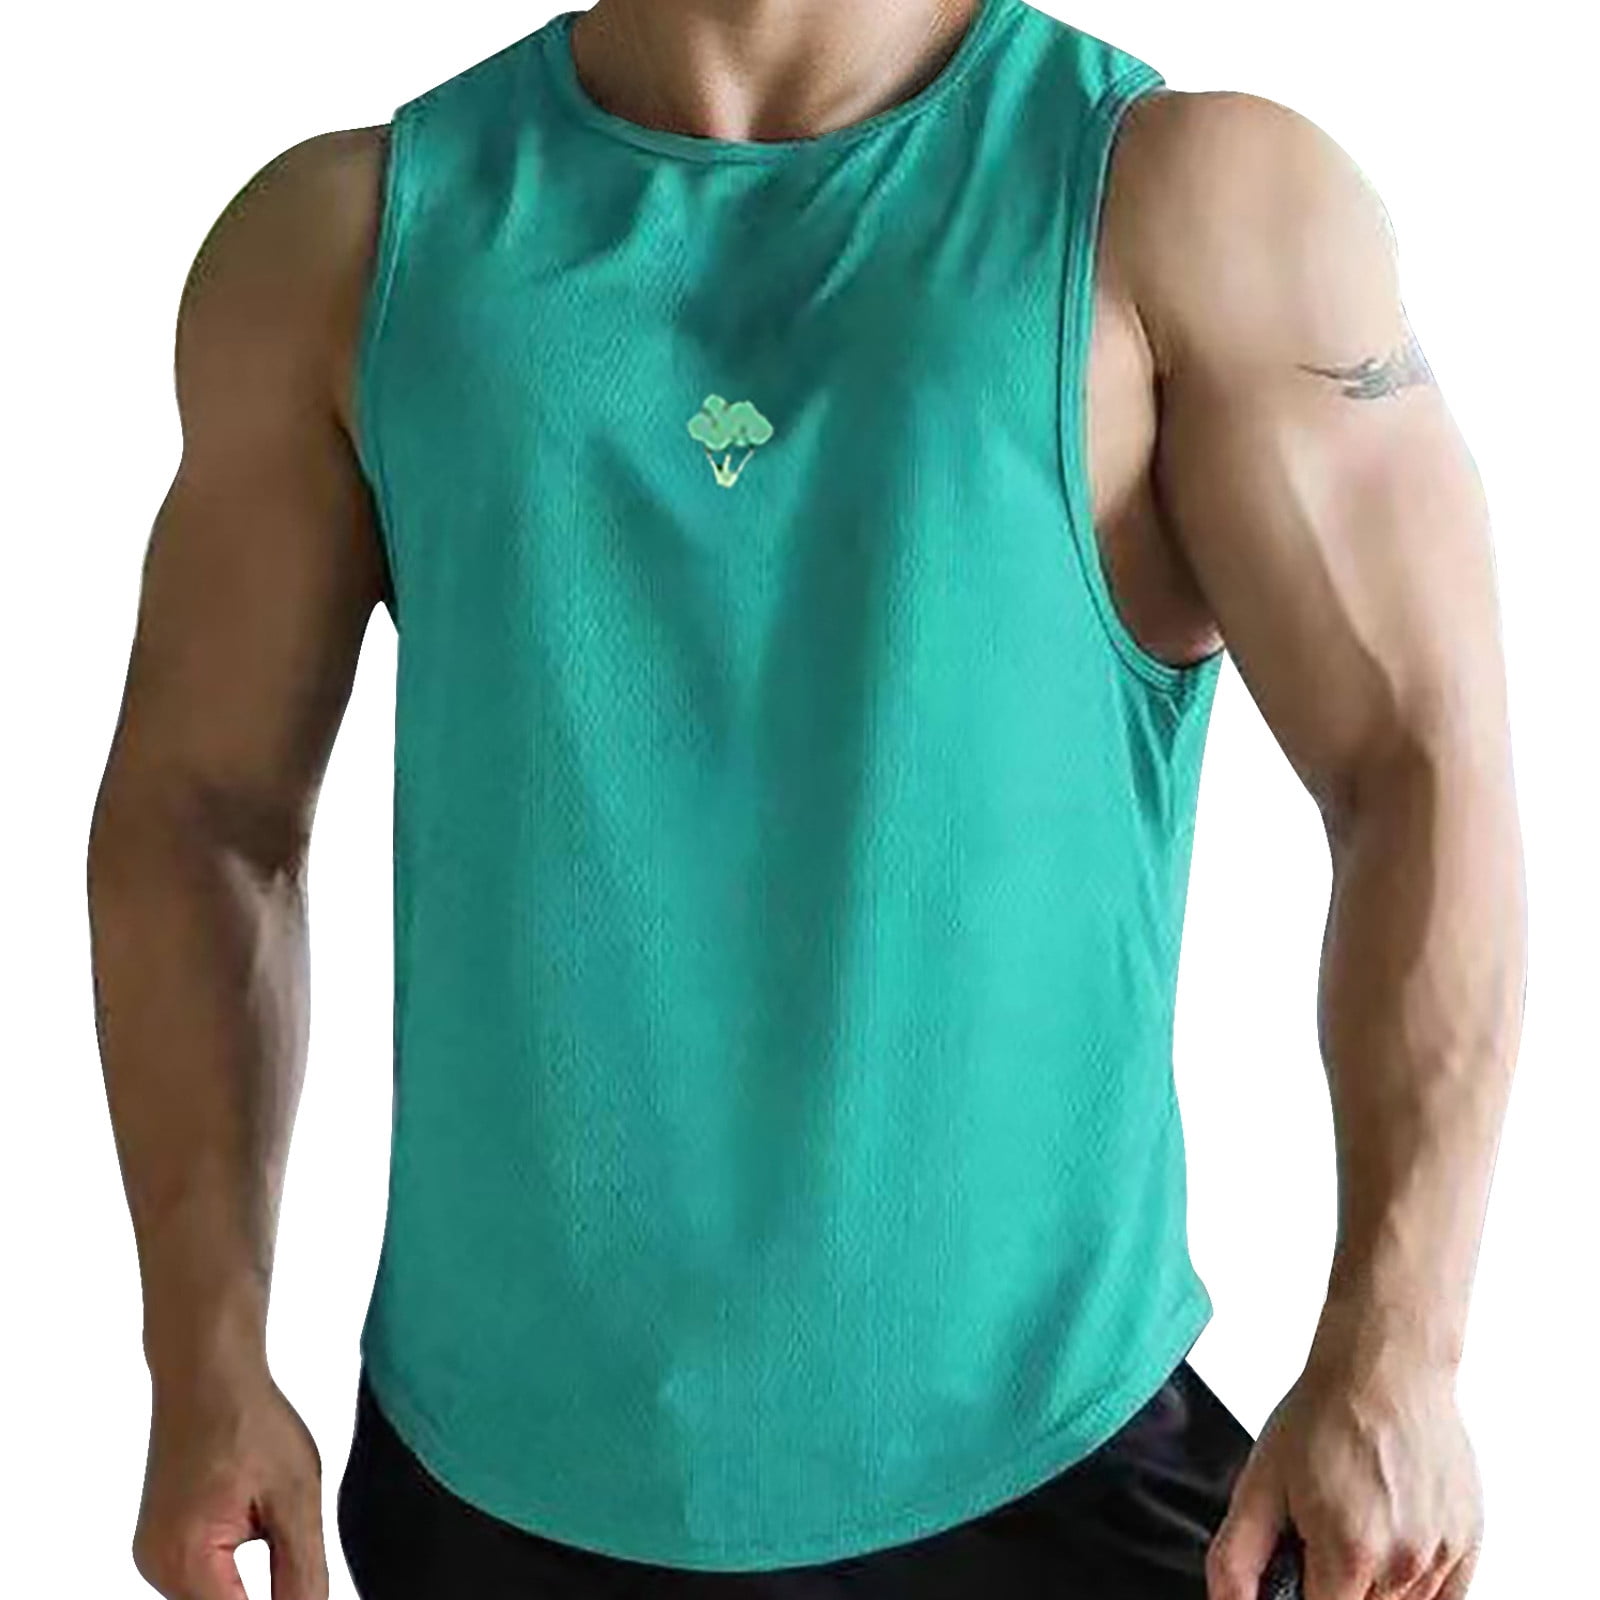 Pedort Tank Tops Men Trendy Men's Cotton Linen Shirts Sleeveless Tank ...